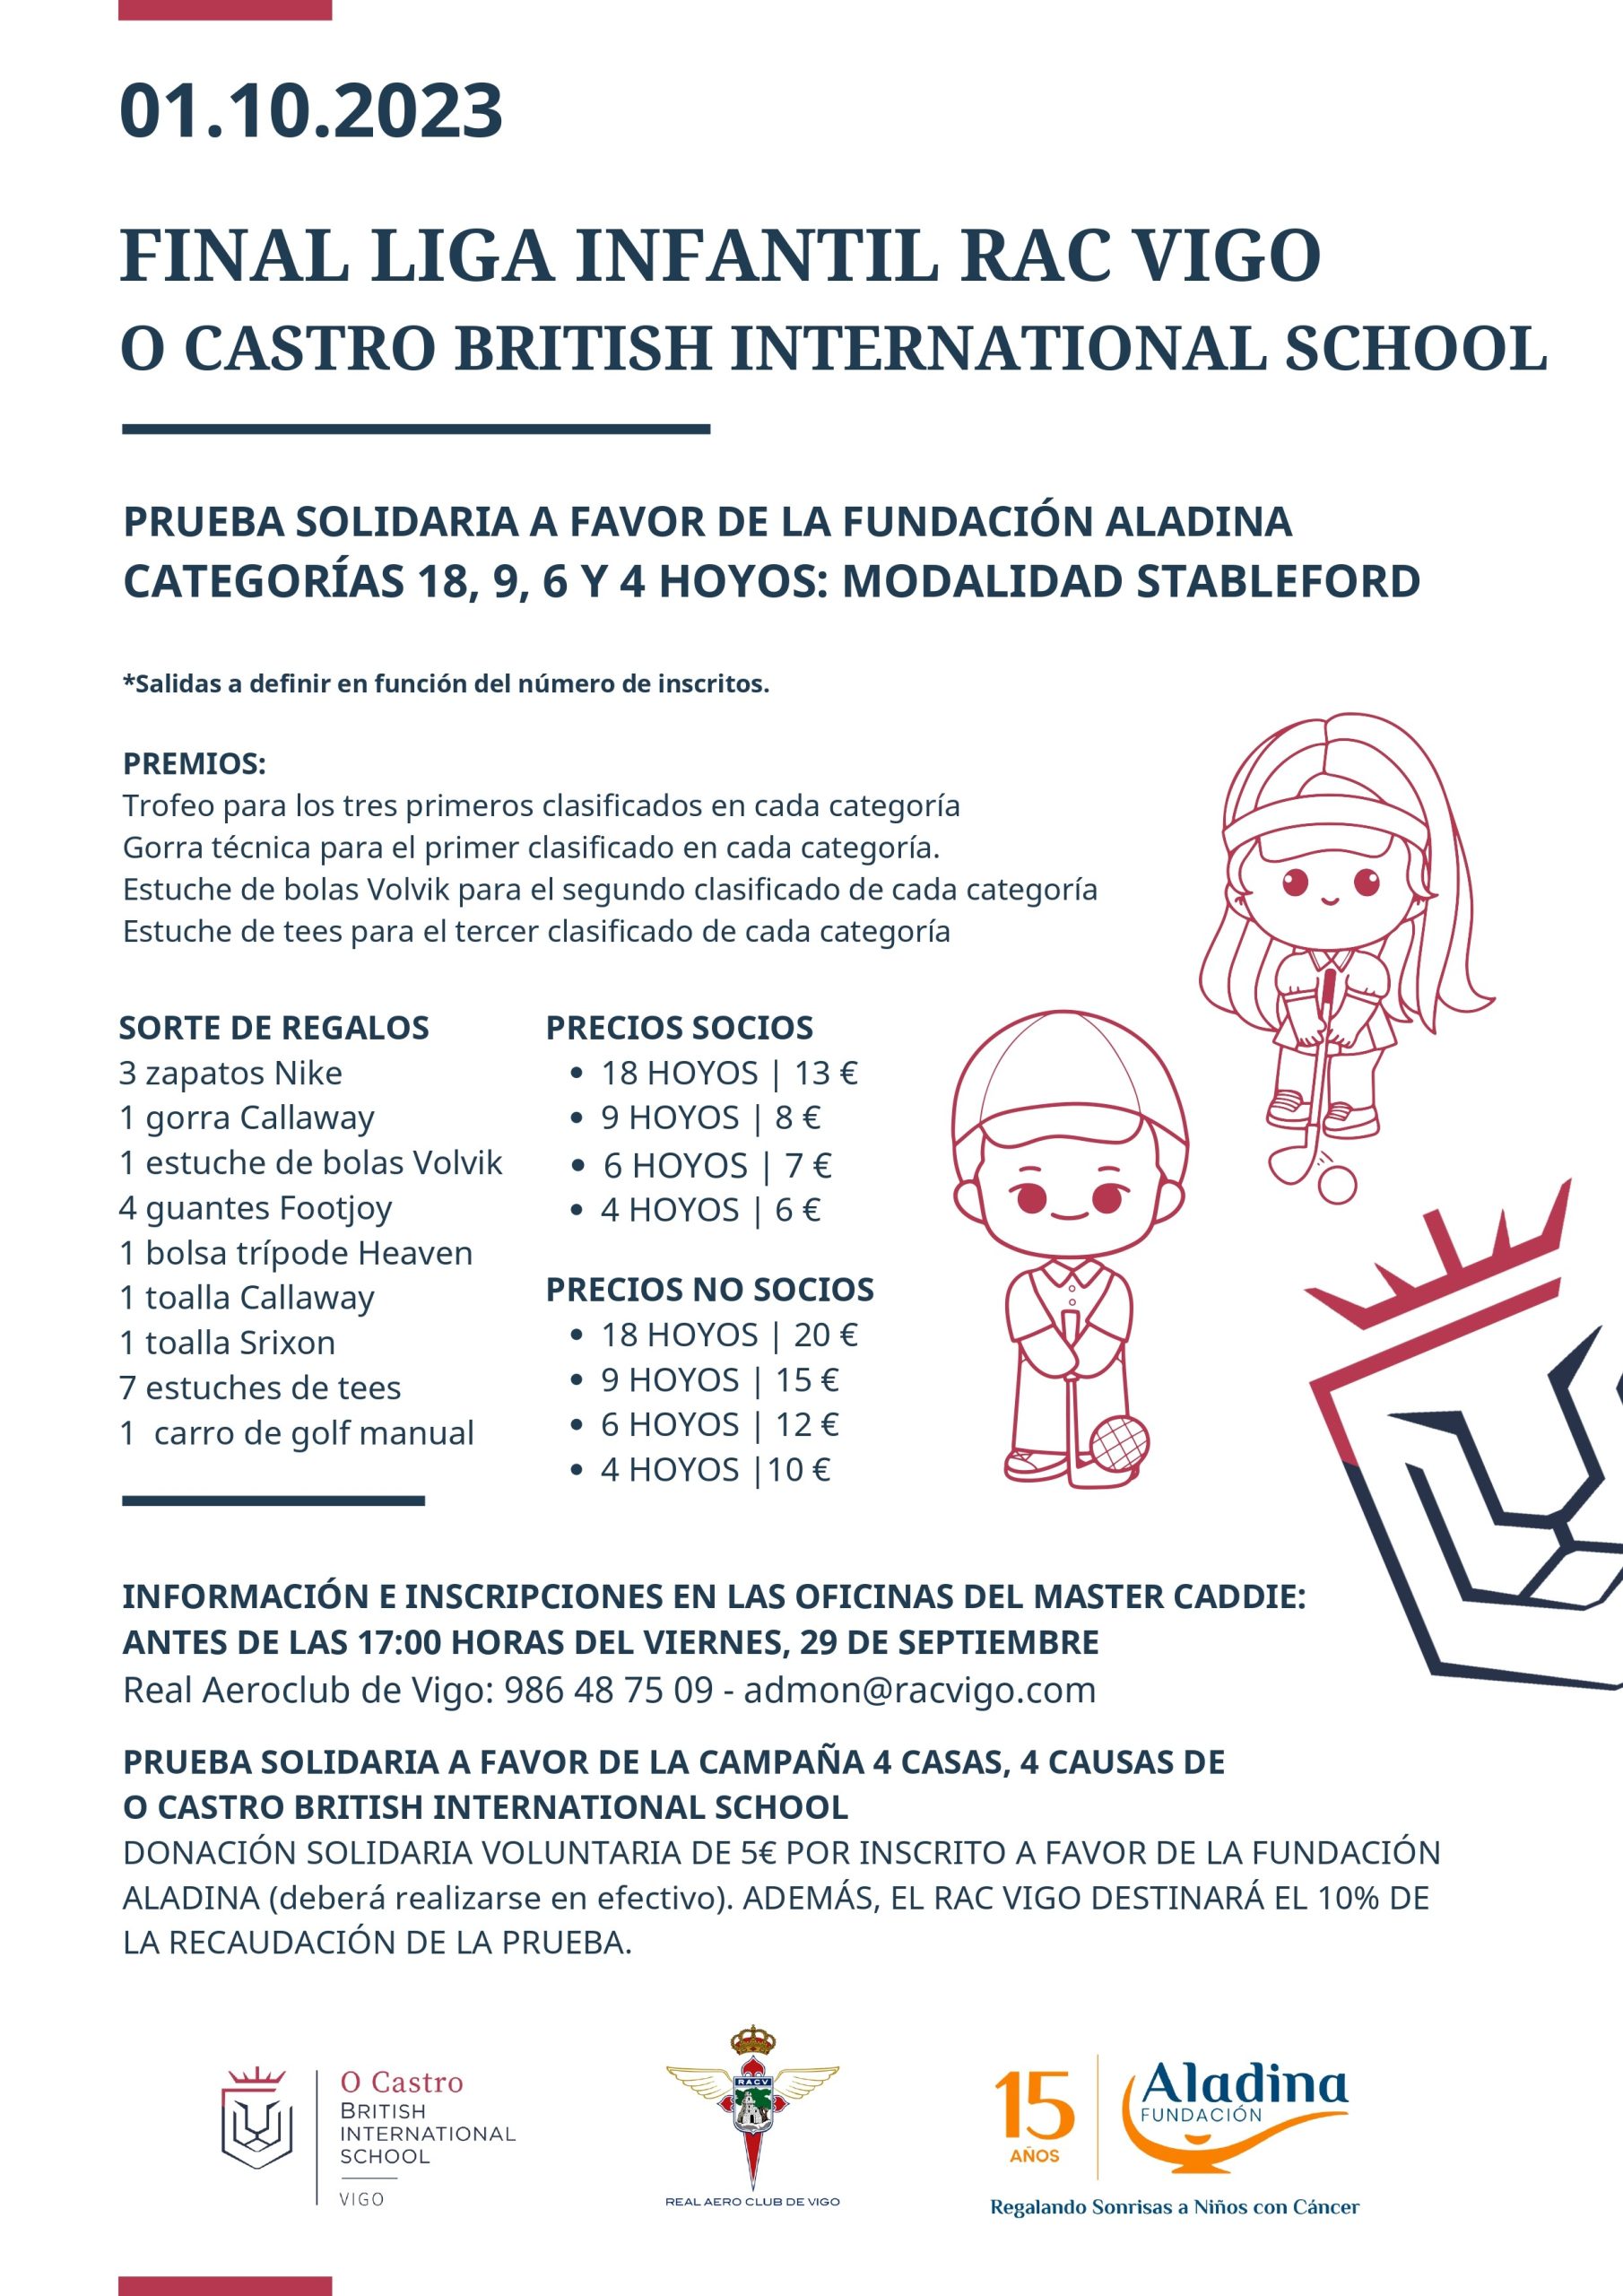 FINAL LIGA INFANTIL - O CASTRO BRITISH SCHOOL